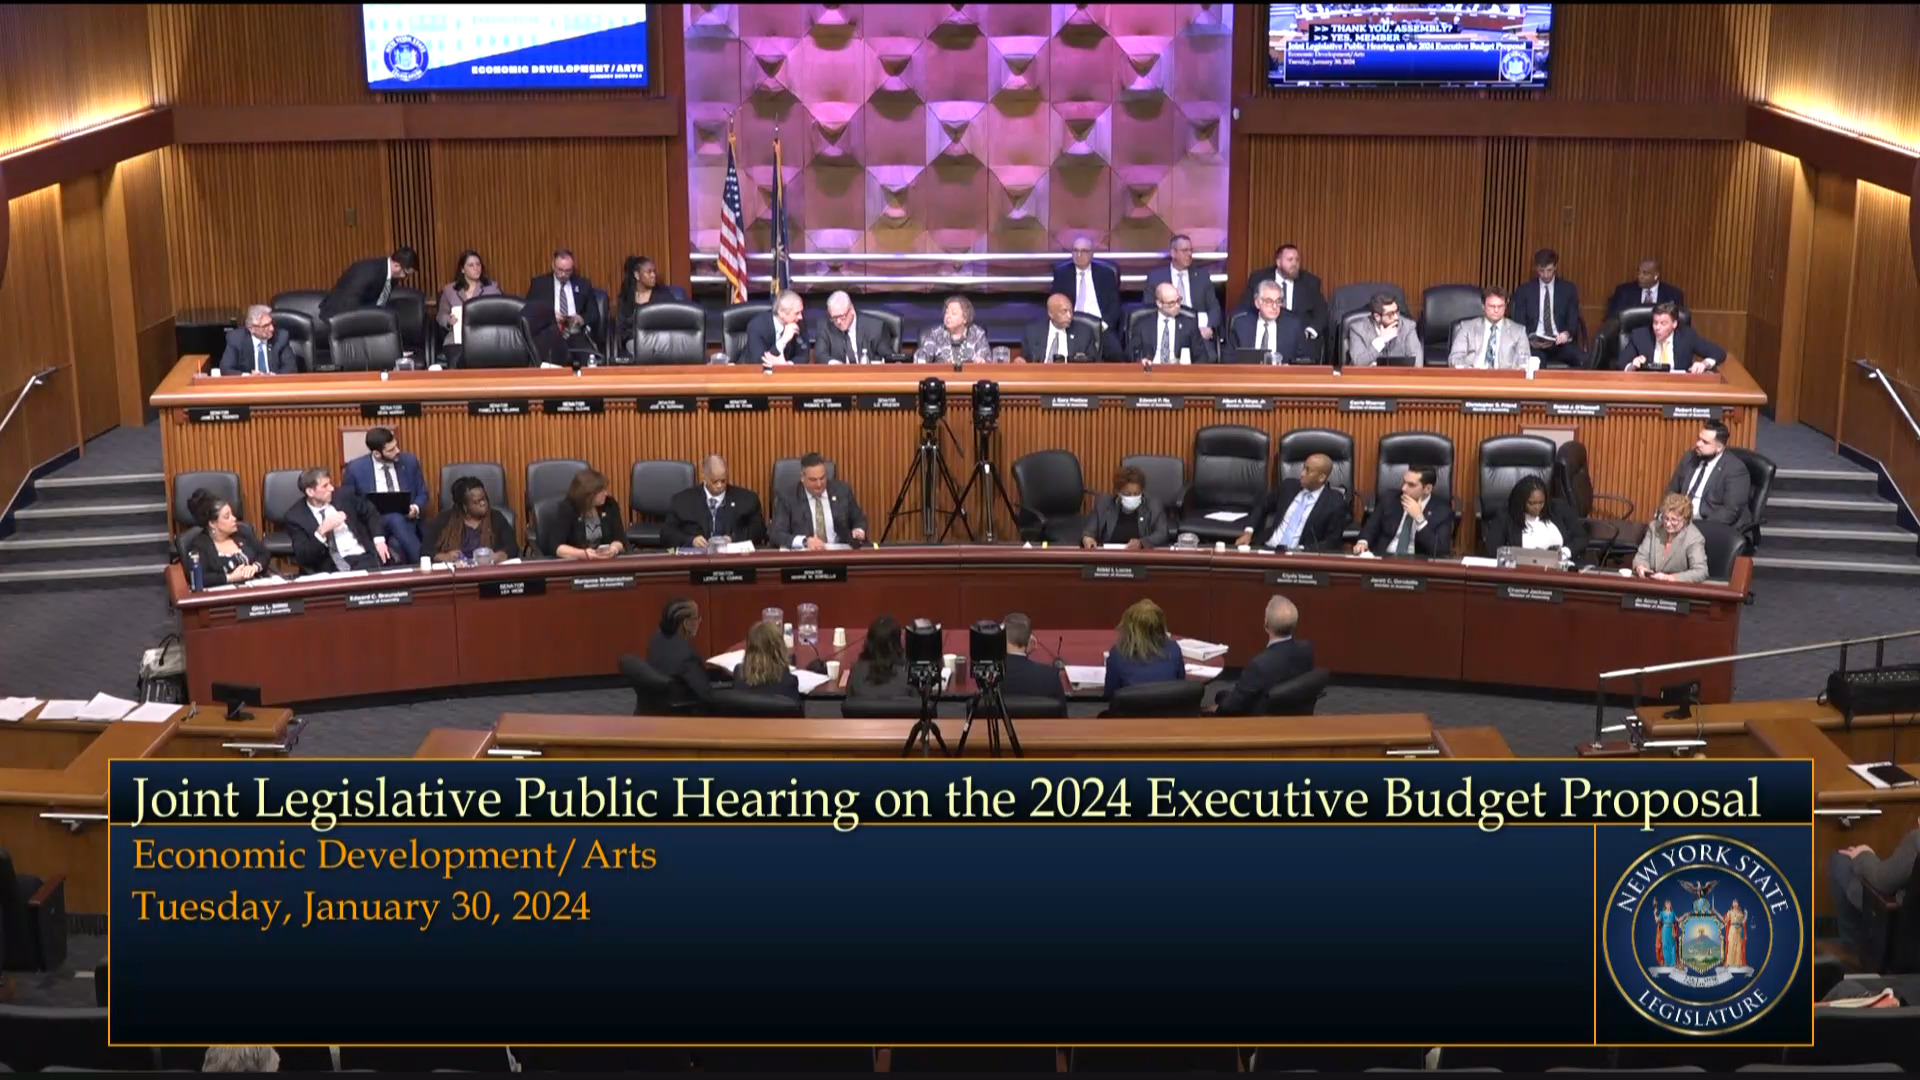 NYS Department of Economic Development Commissioner Testifies During Budget Hearing on Economic Development